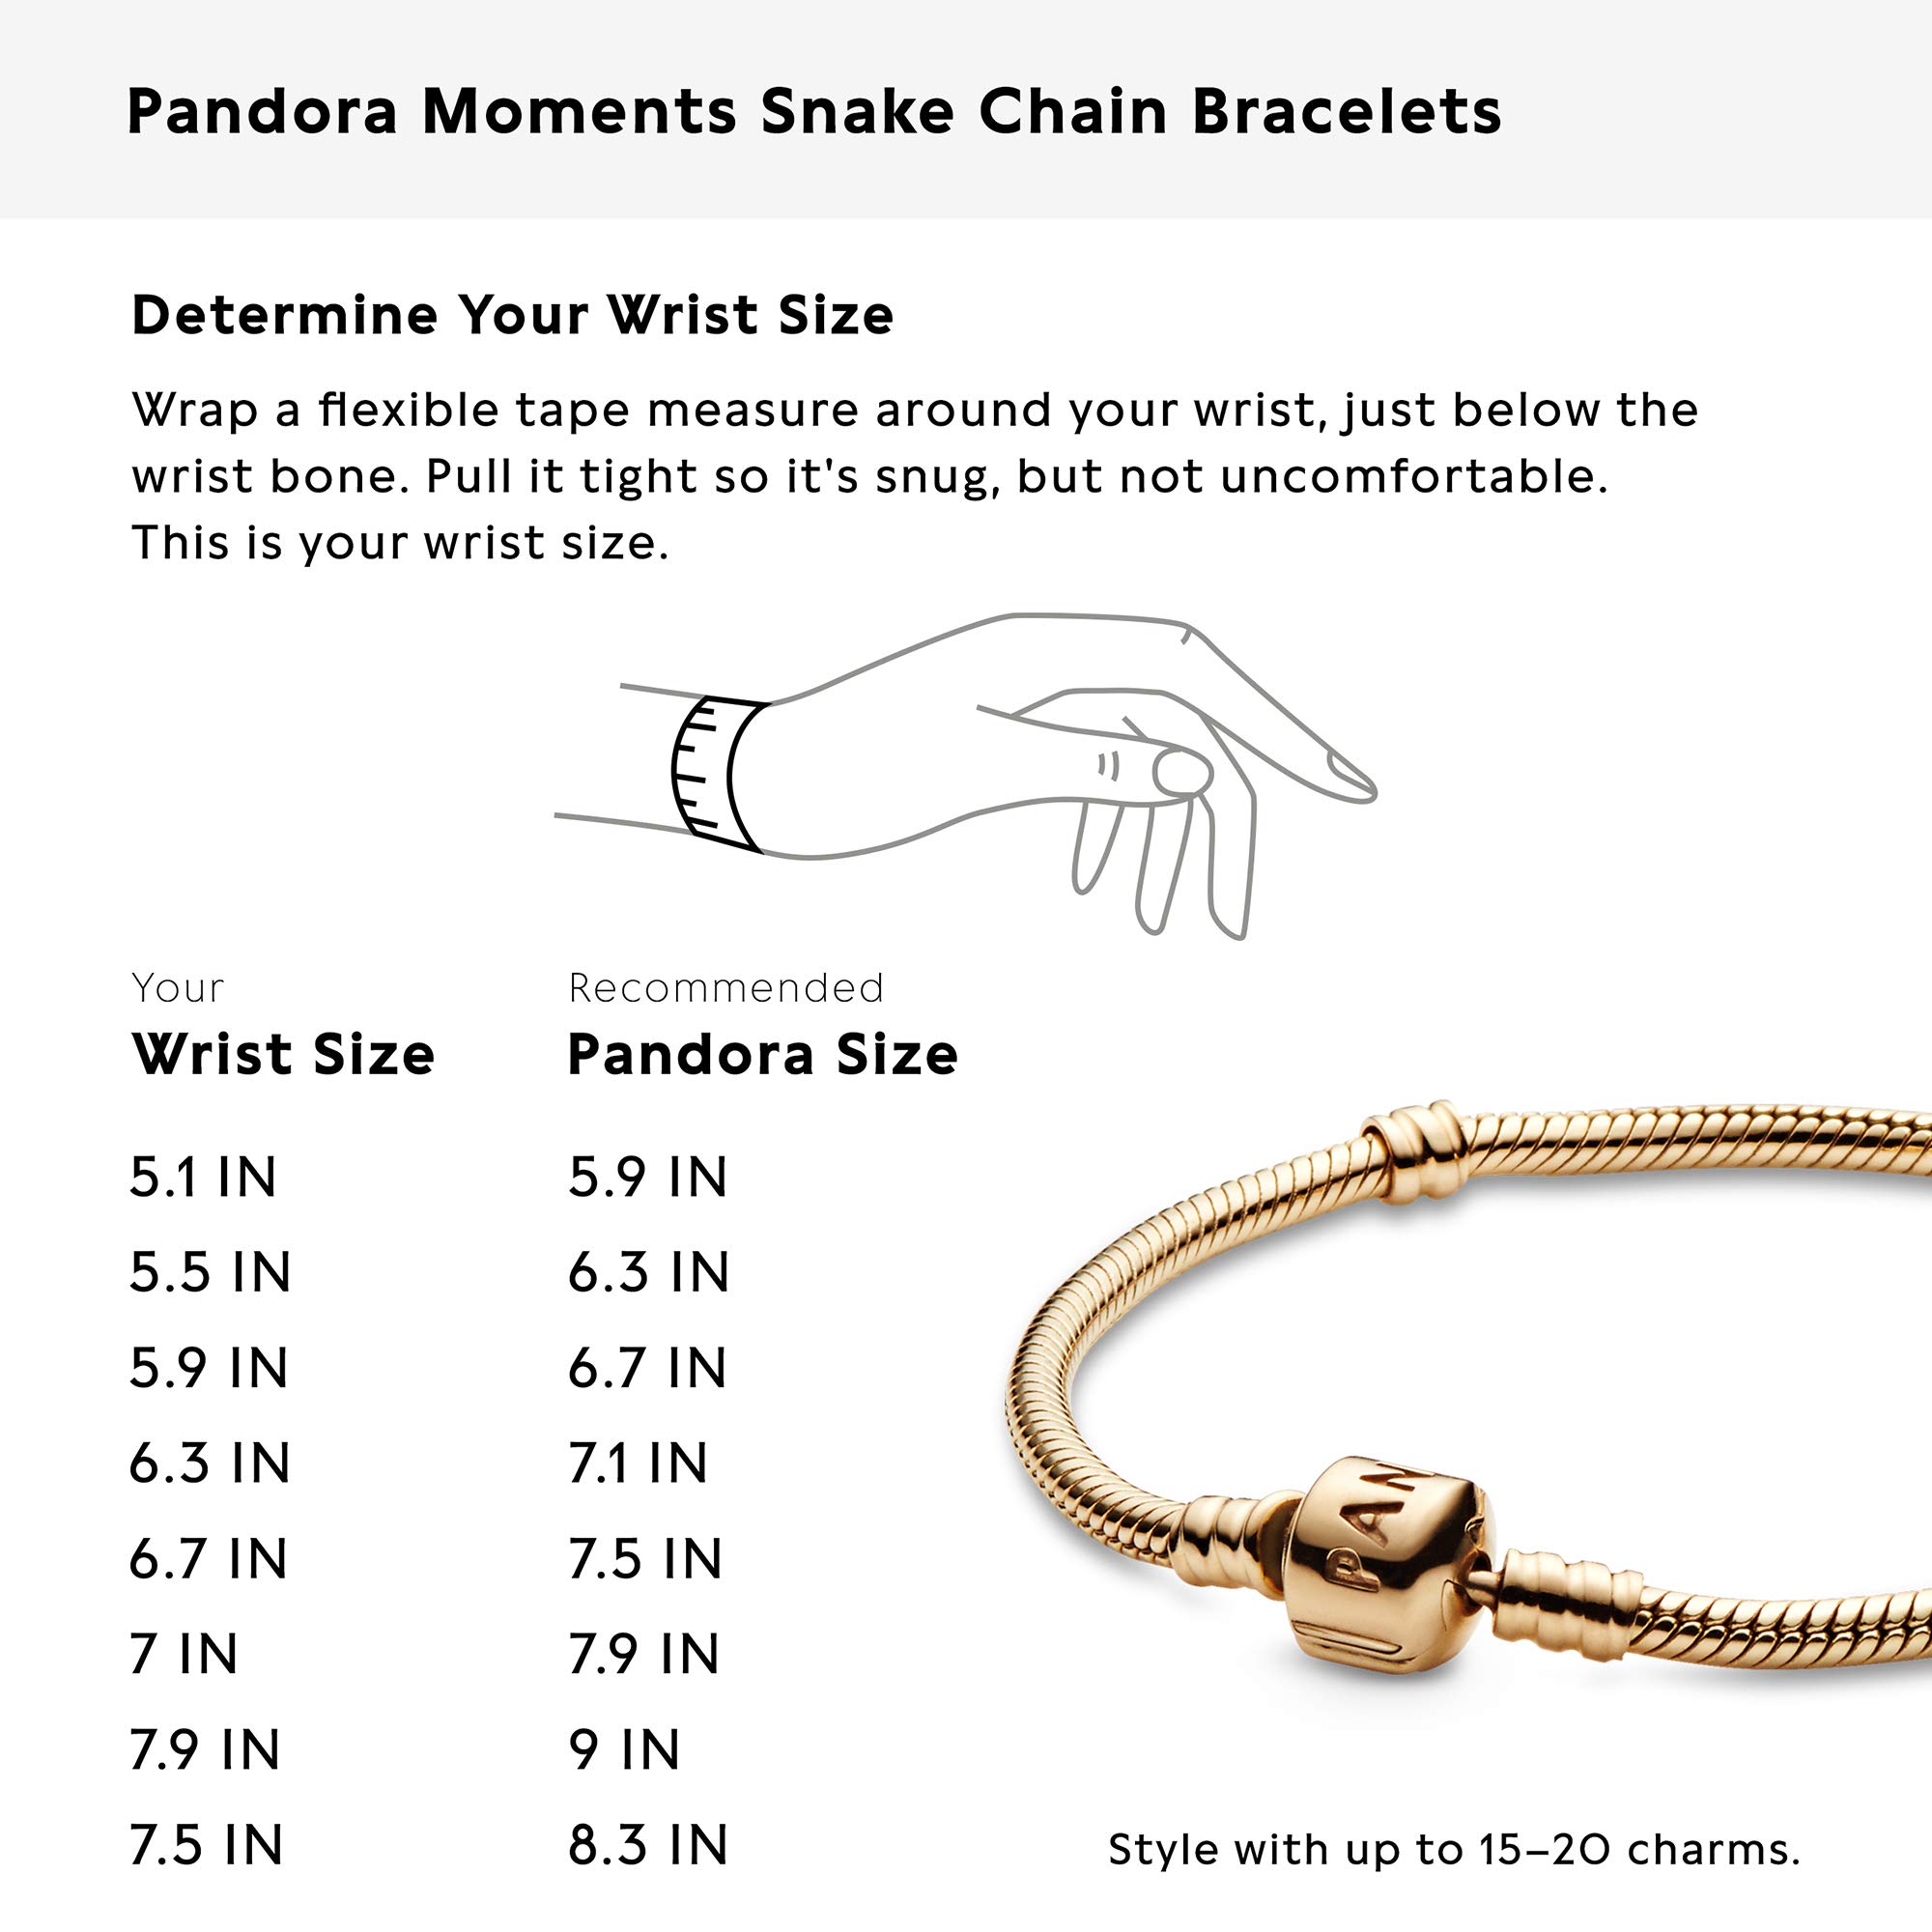 PANDORA Jewelry Iconic Moments Snake Chain Charm Bracelet